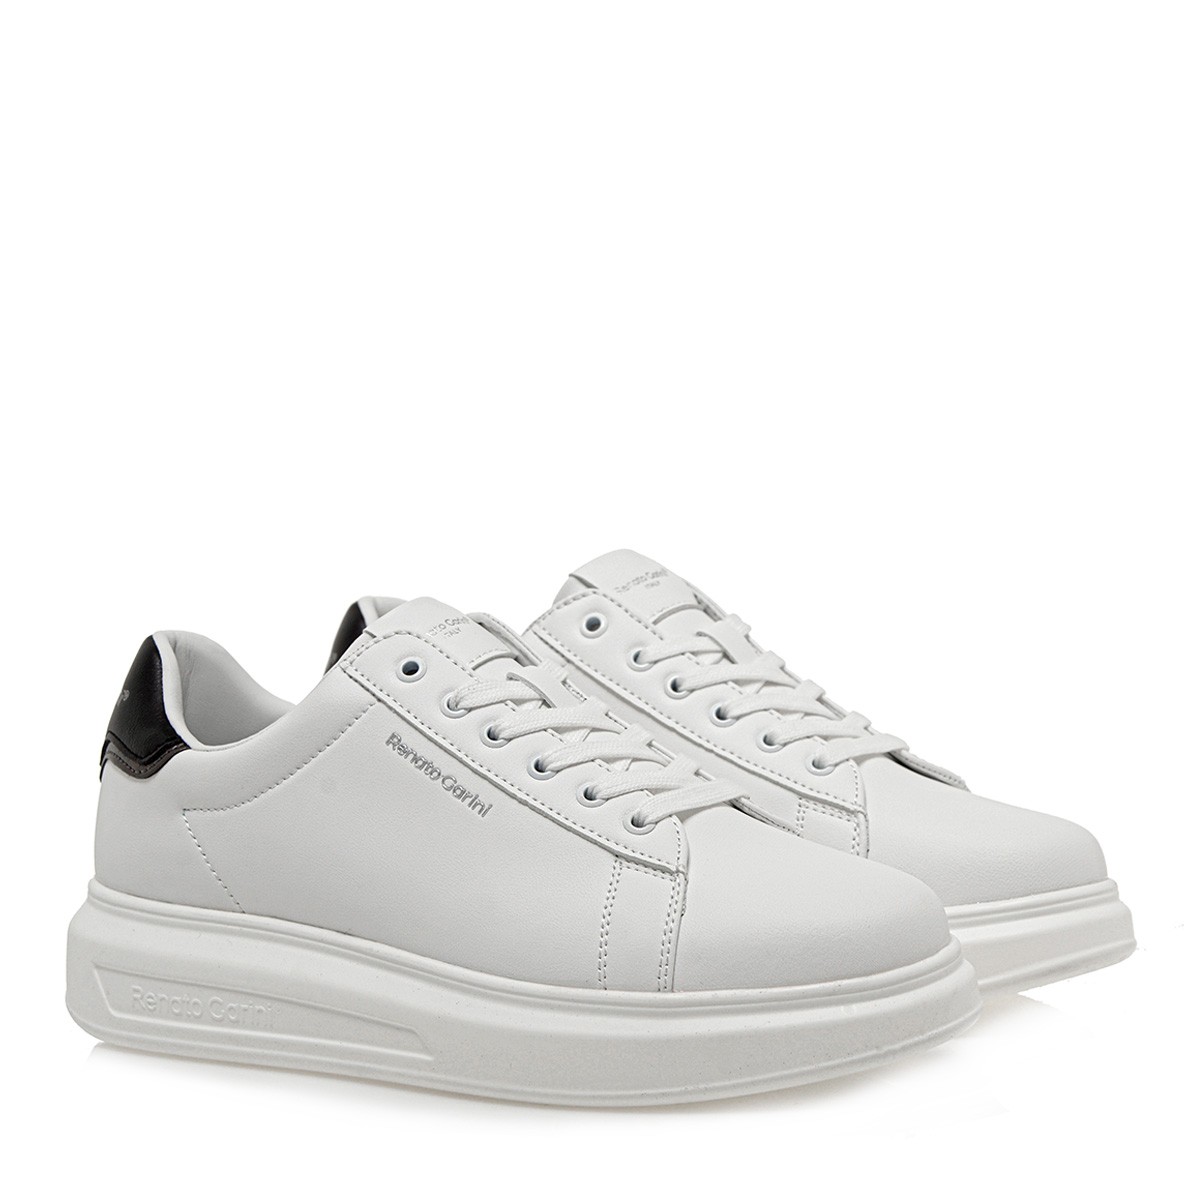 Renato Garini Ανδρικά παπούτσια Sneakers 700-251 Λευκό Μαύρο Ατσαλί S57002513Z62 Λευκό